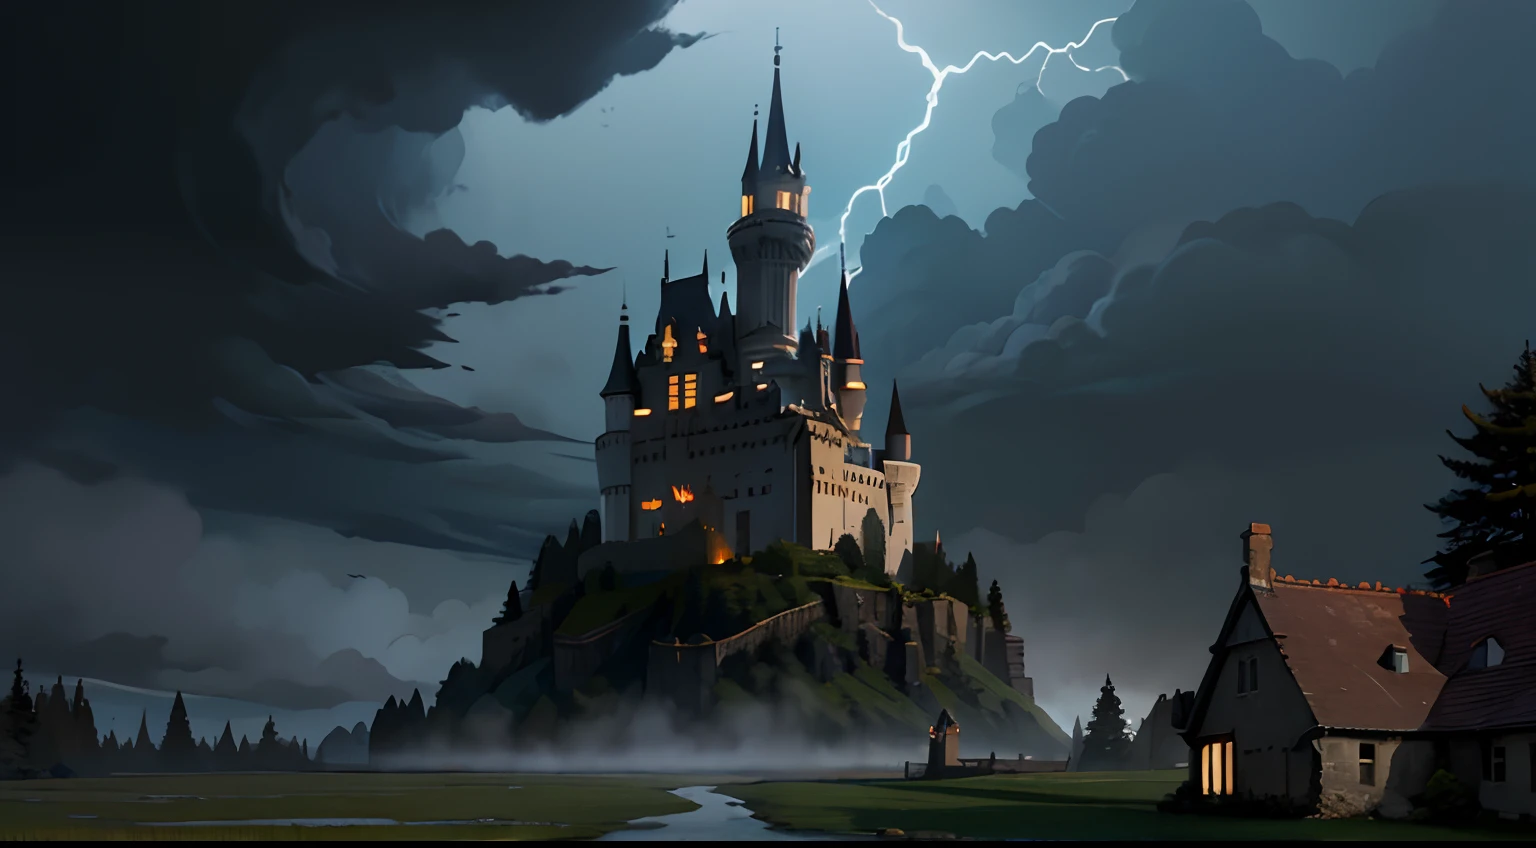 cartoon style, 1 castle, scary castle, horror scene, dark setting, fog, storm clouds, lightning, abandoned castle, ruined castle,